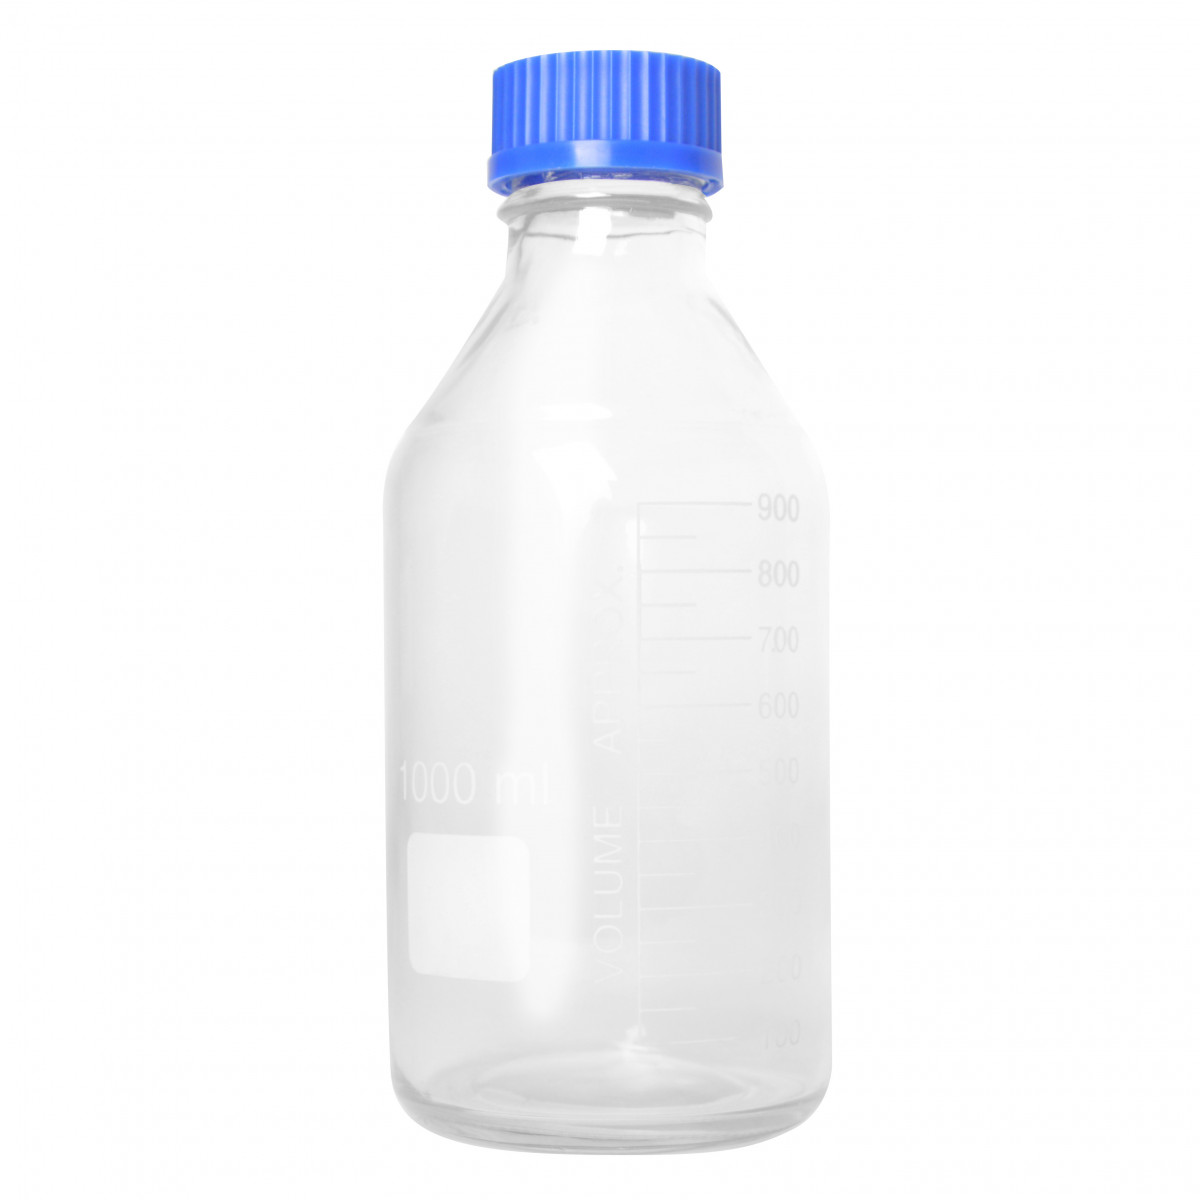 Yeast bottle glass sterilisable 1000 ml